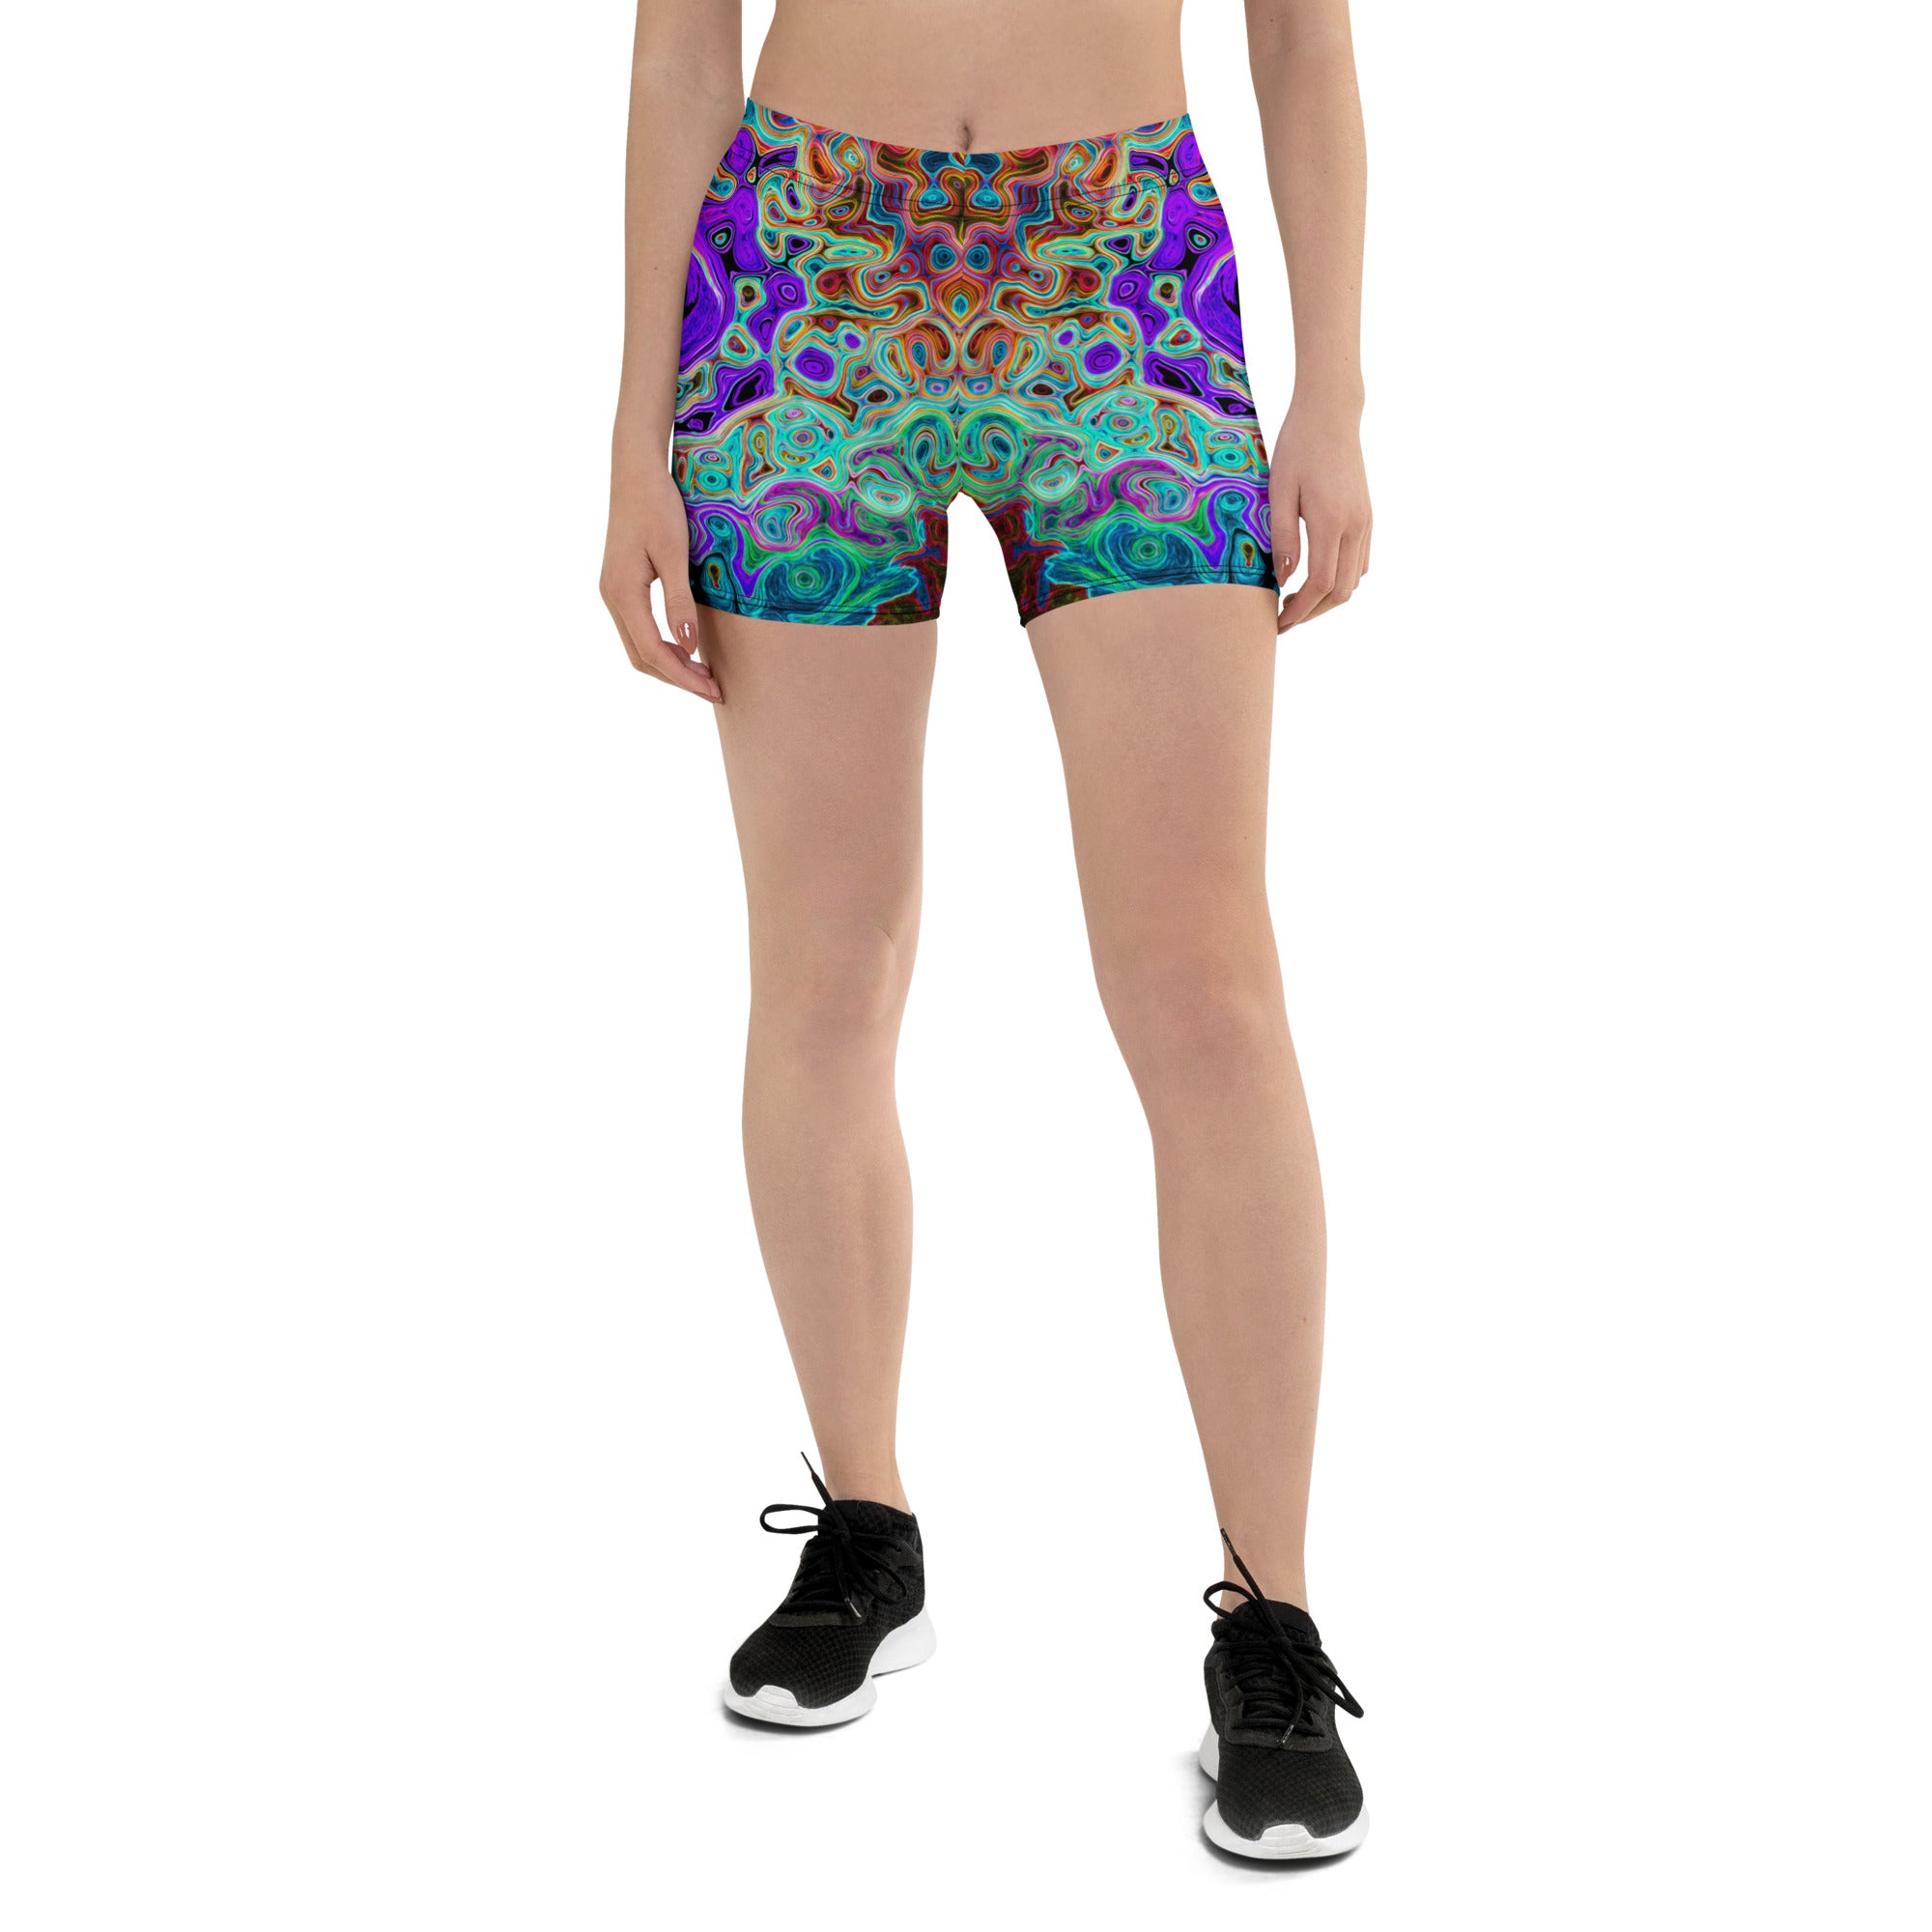 Spandex Shorts - Purple Colorful Groovy Abstract Retro Liquid Swirl